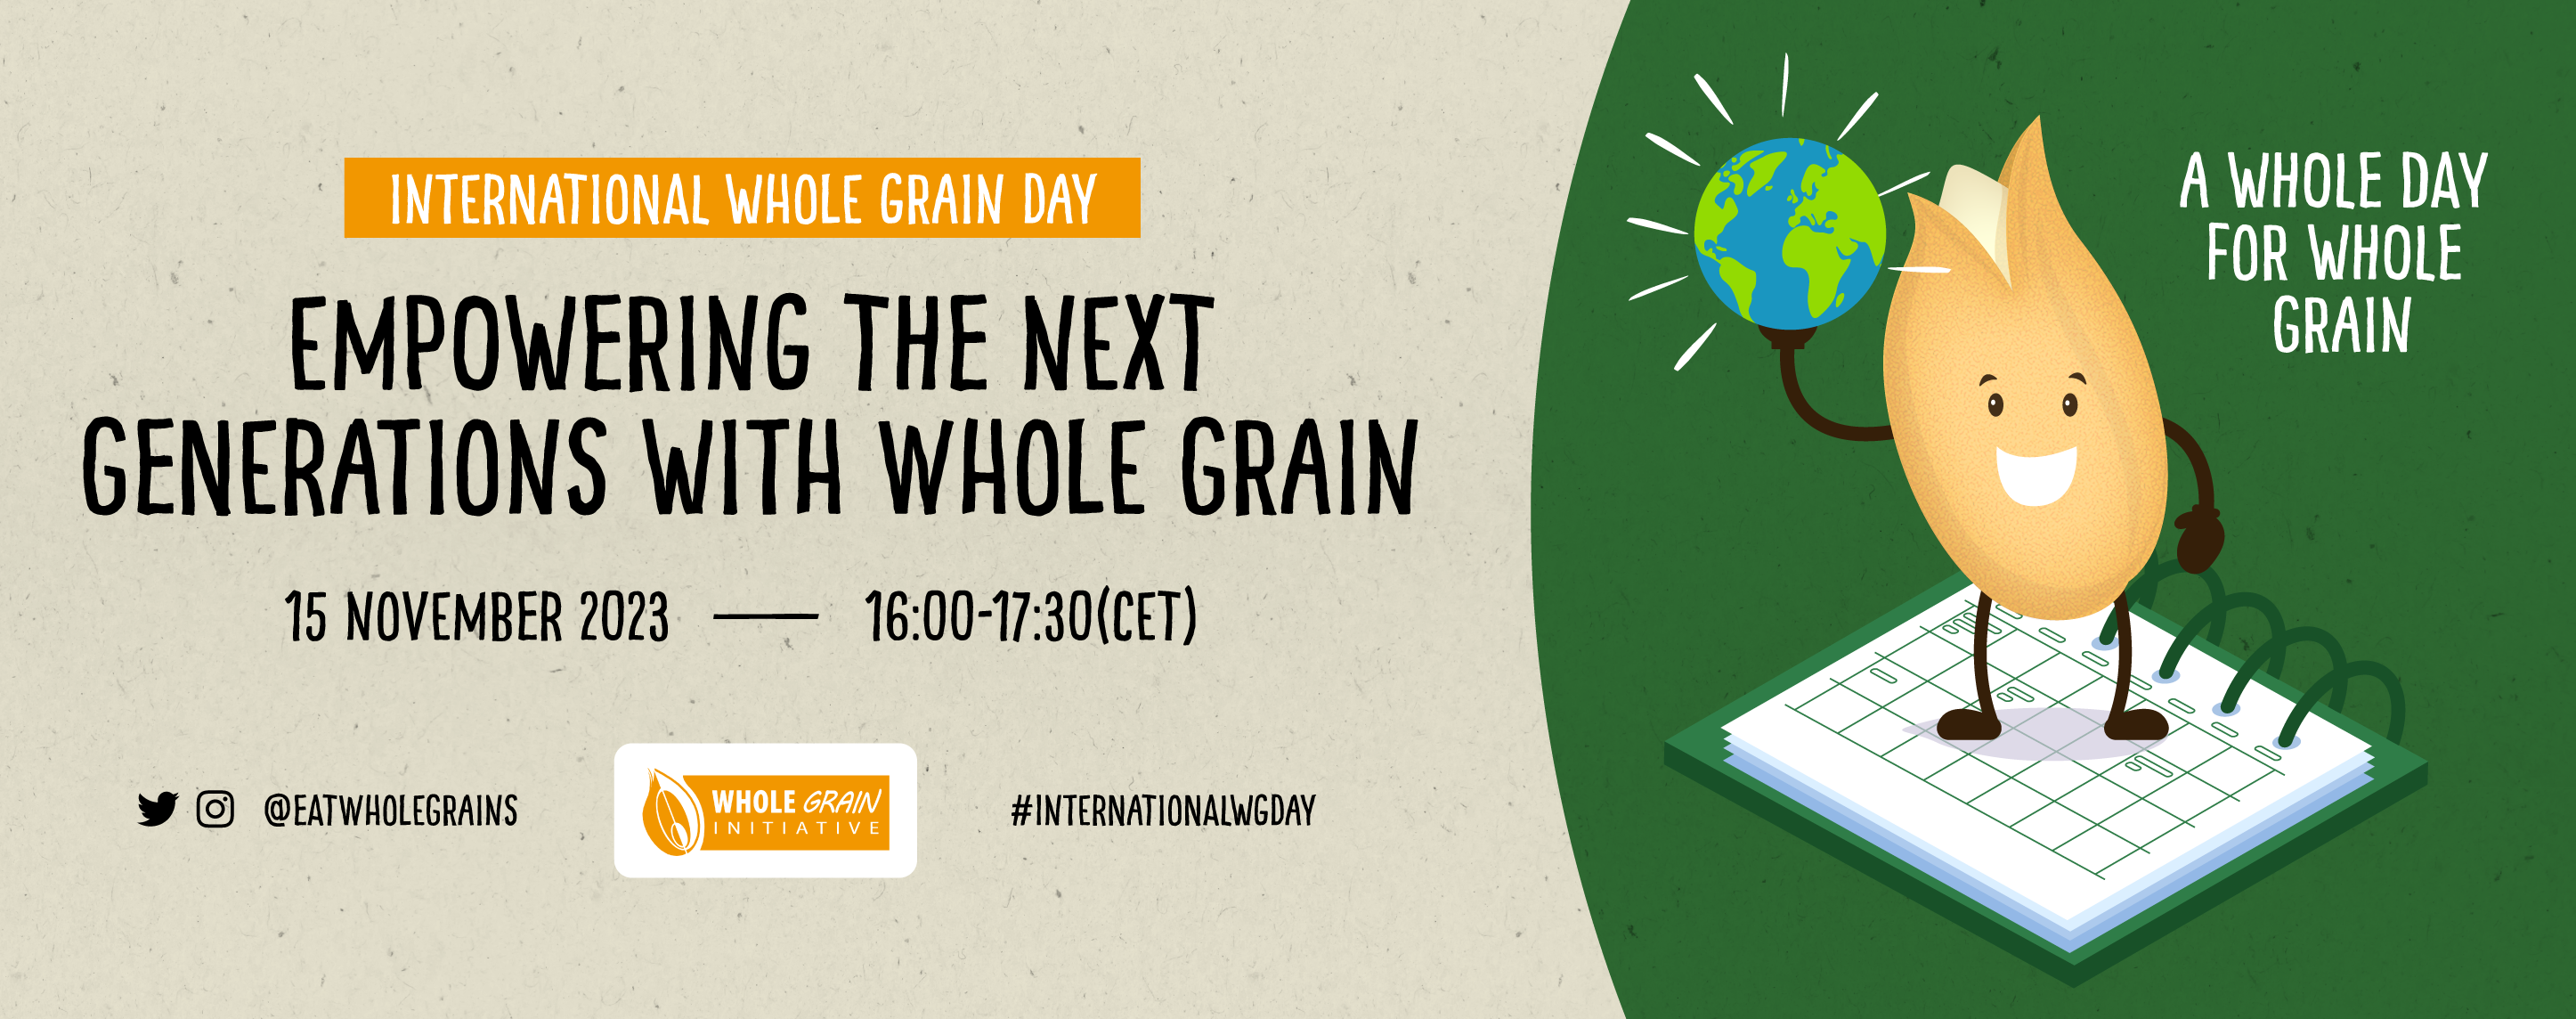 International Whole Grain Day 2023